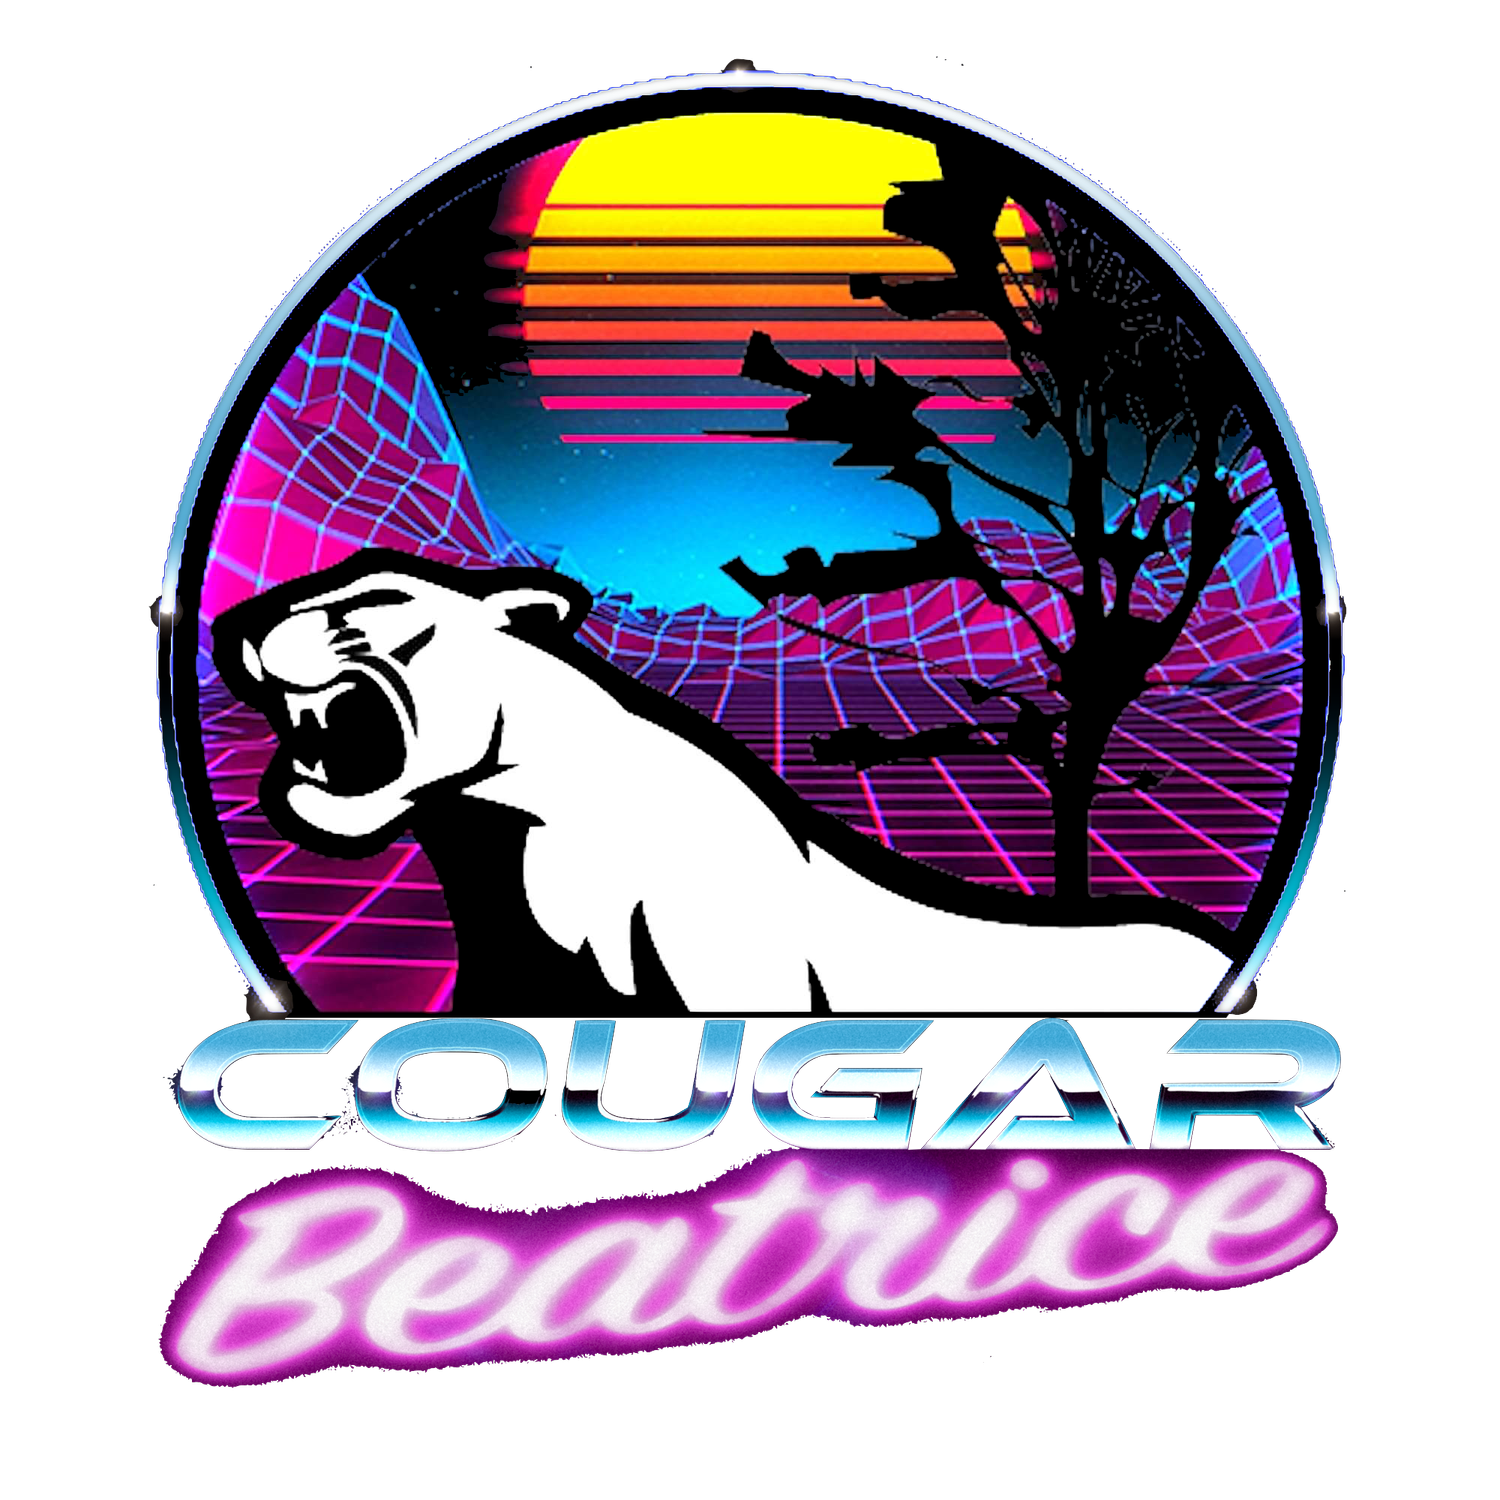 Cougar Beatrice